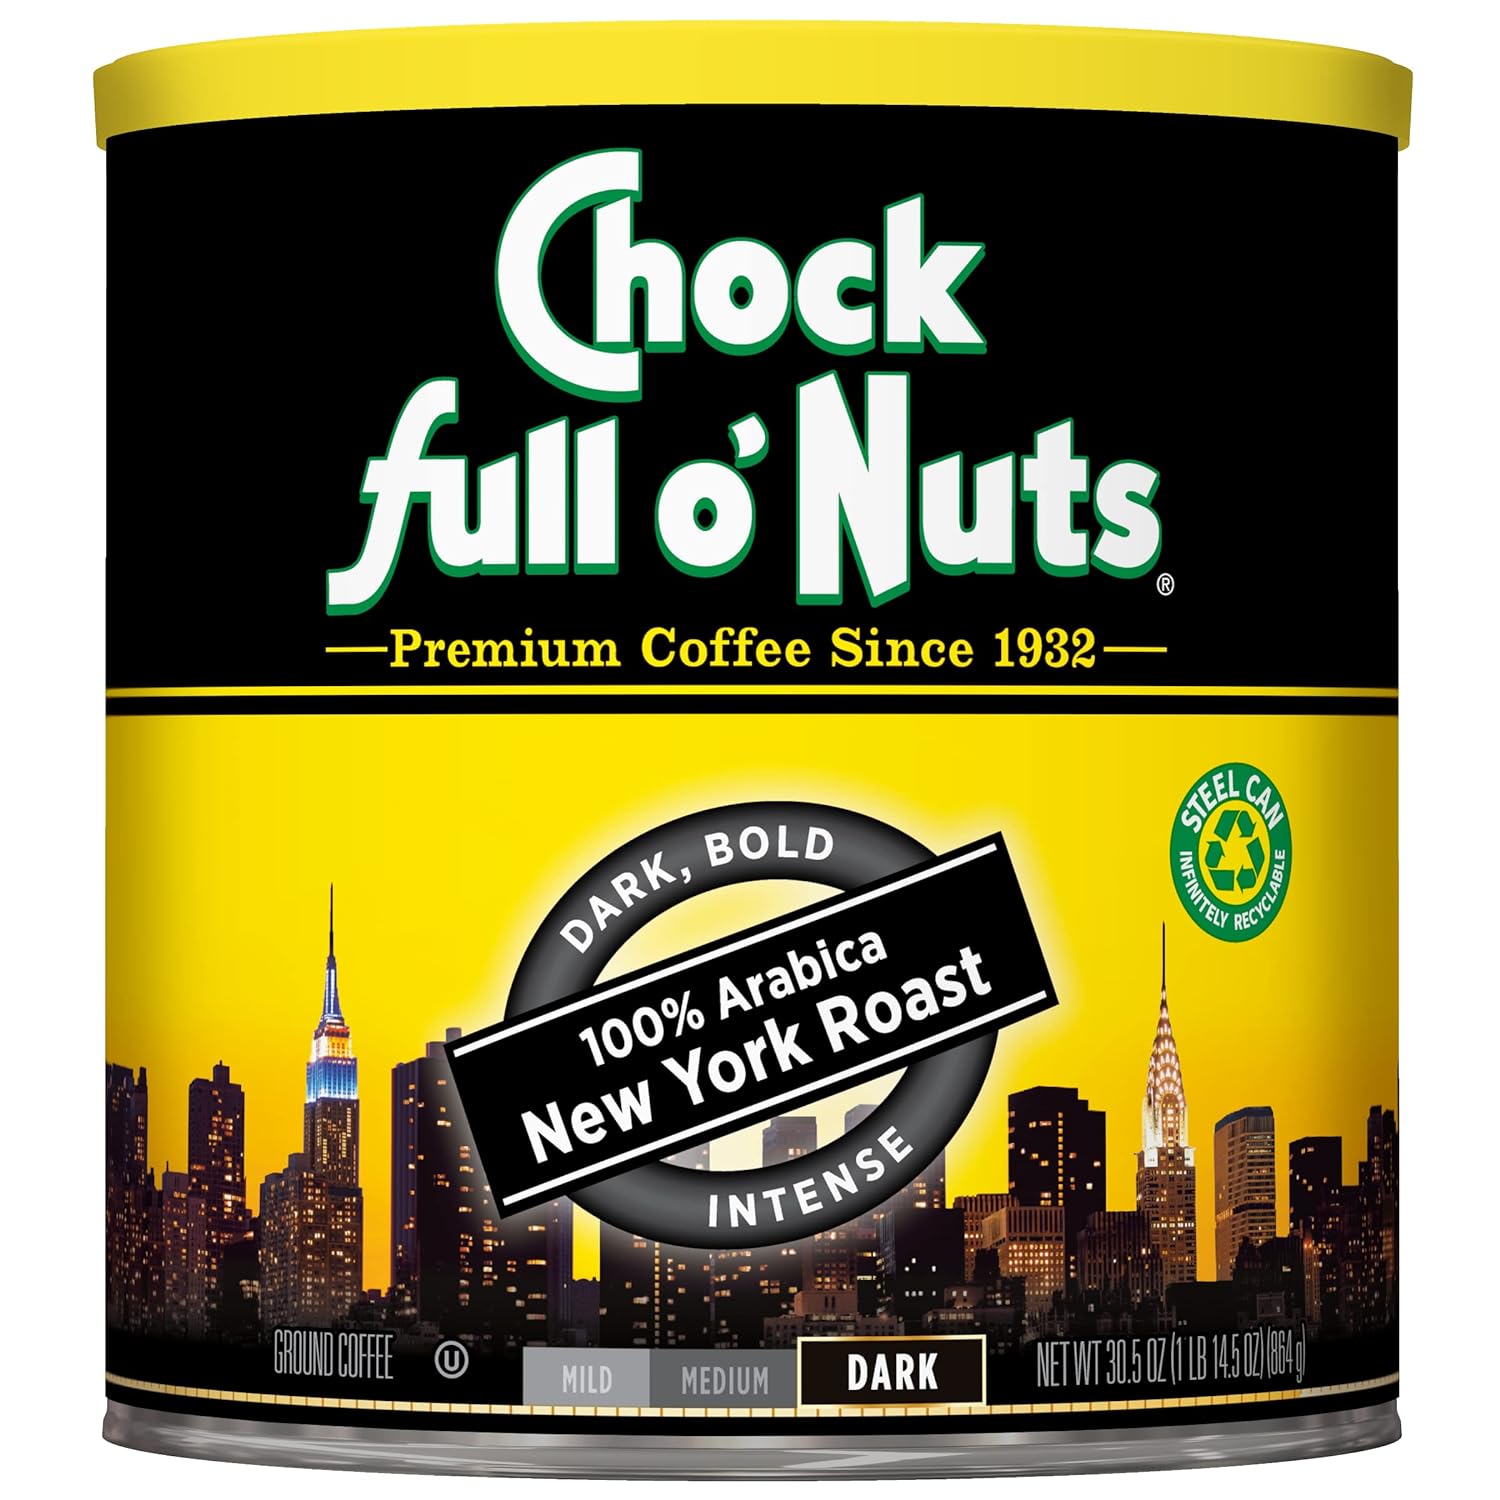 Chock Full o’Nuts New York Roast, Dark Roast Ground Coffee – Gourmet Arabica Coffee Beans – Bold, Full-Bodied and Intense Coffee (30.5 Oz. Can)